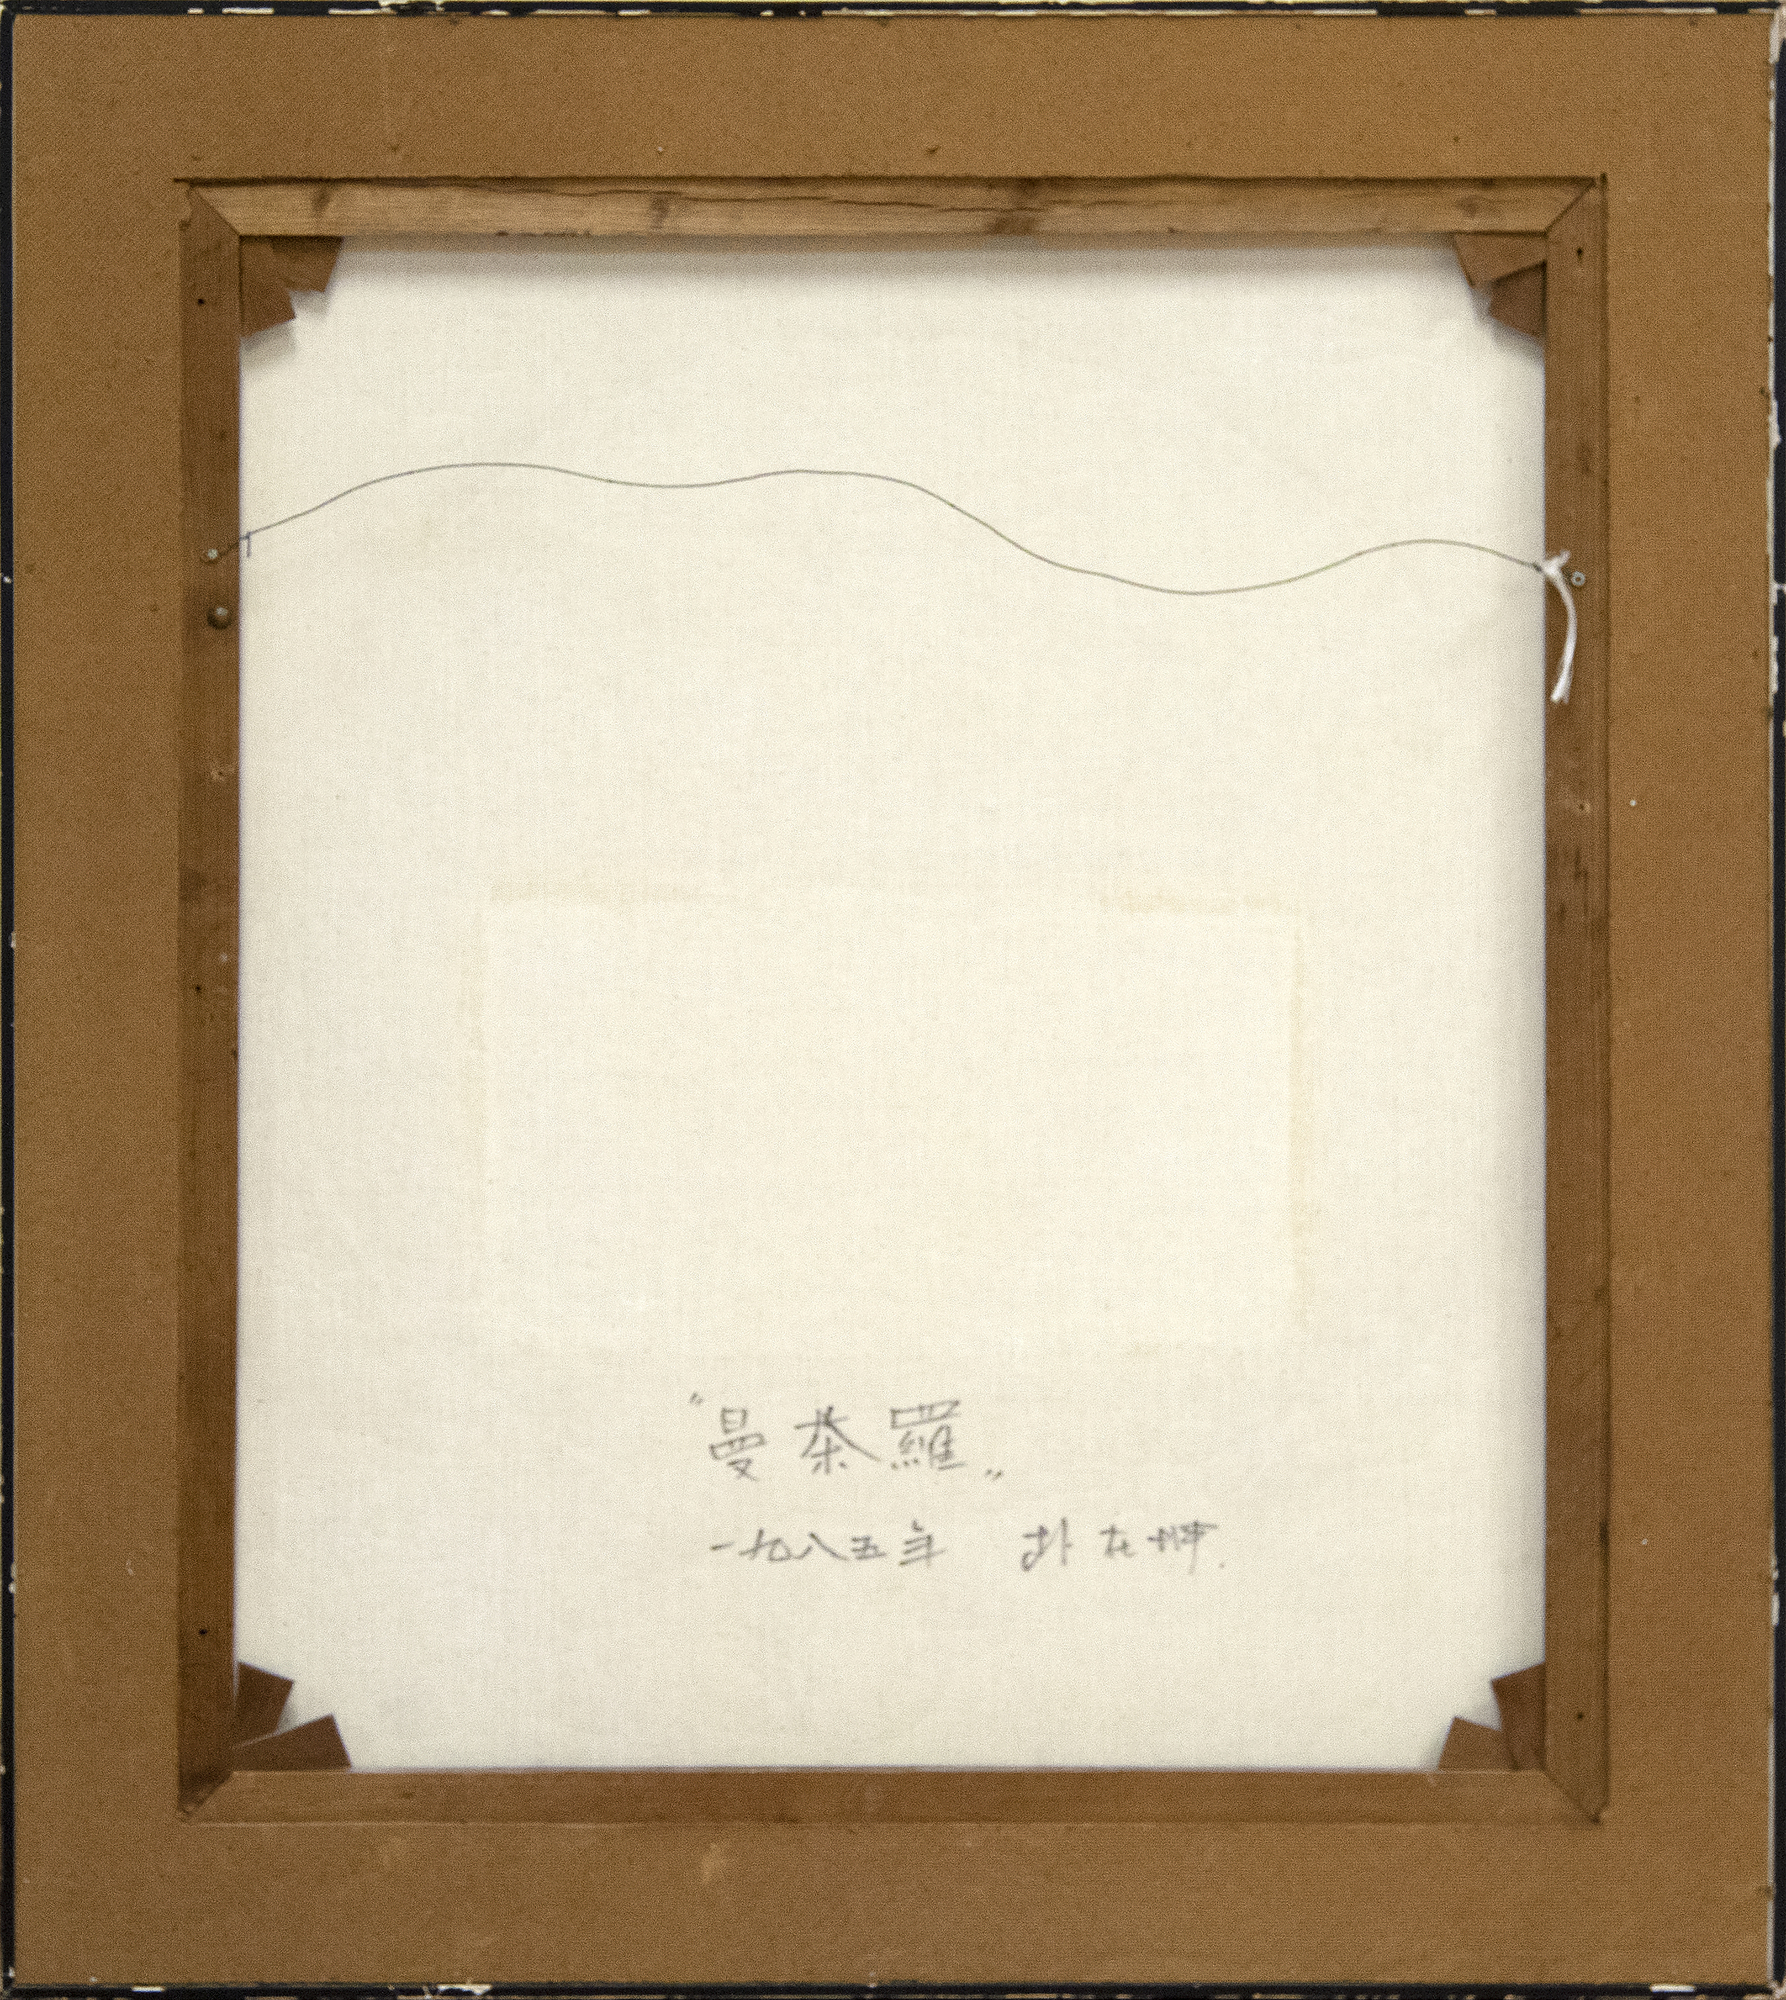 JAE KON PARK - 无标题 - 画布上的油画 - 31 3/4 x 27 1/2 in.